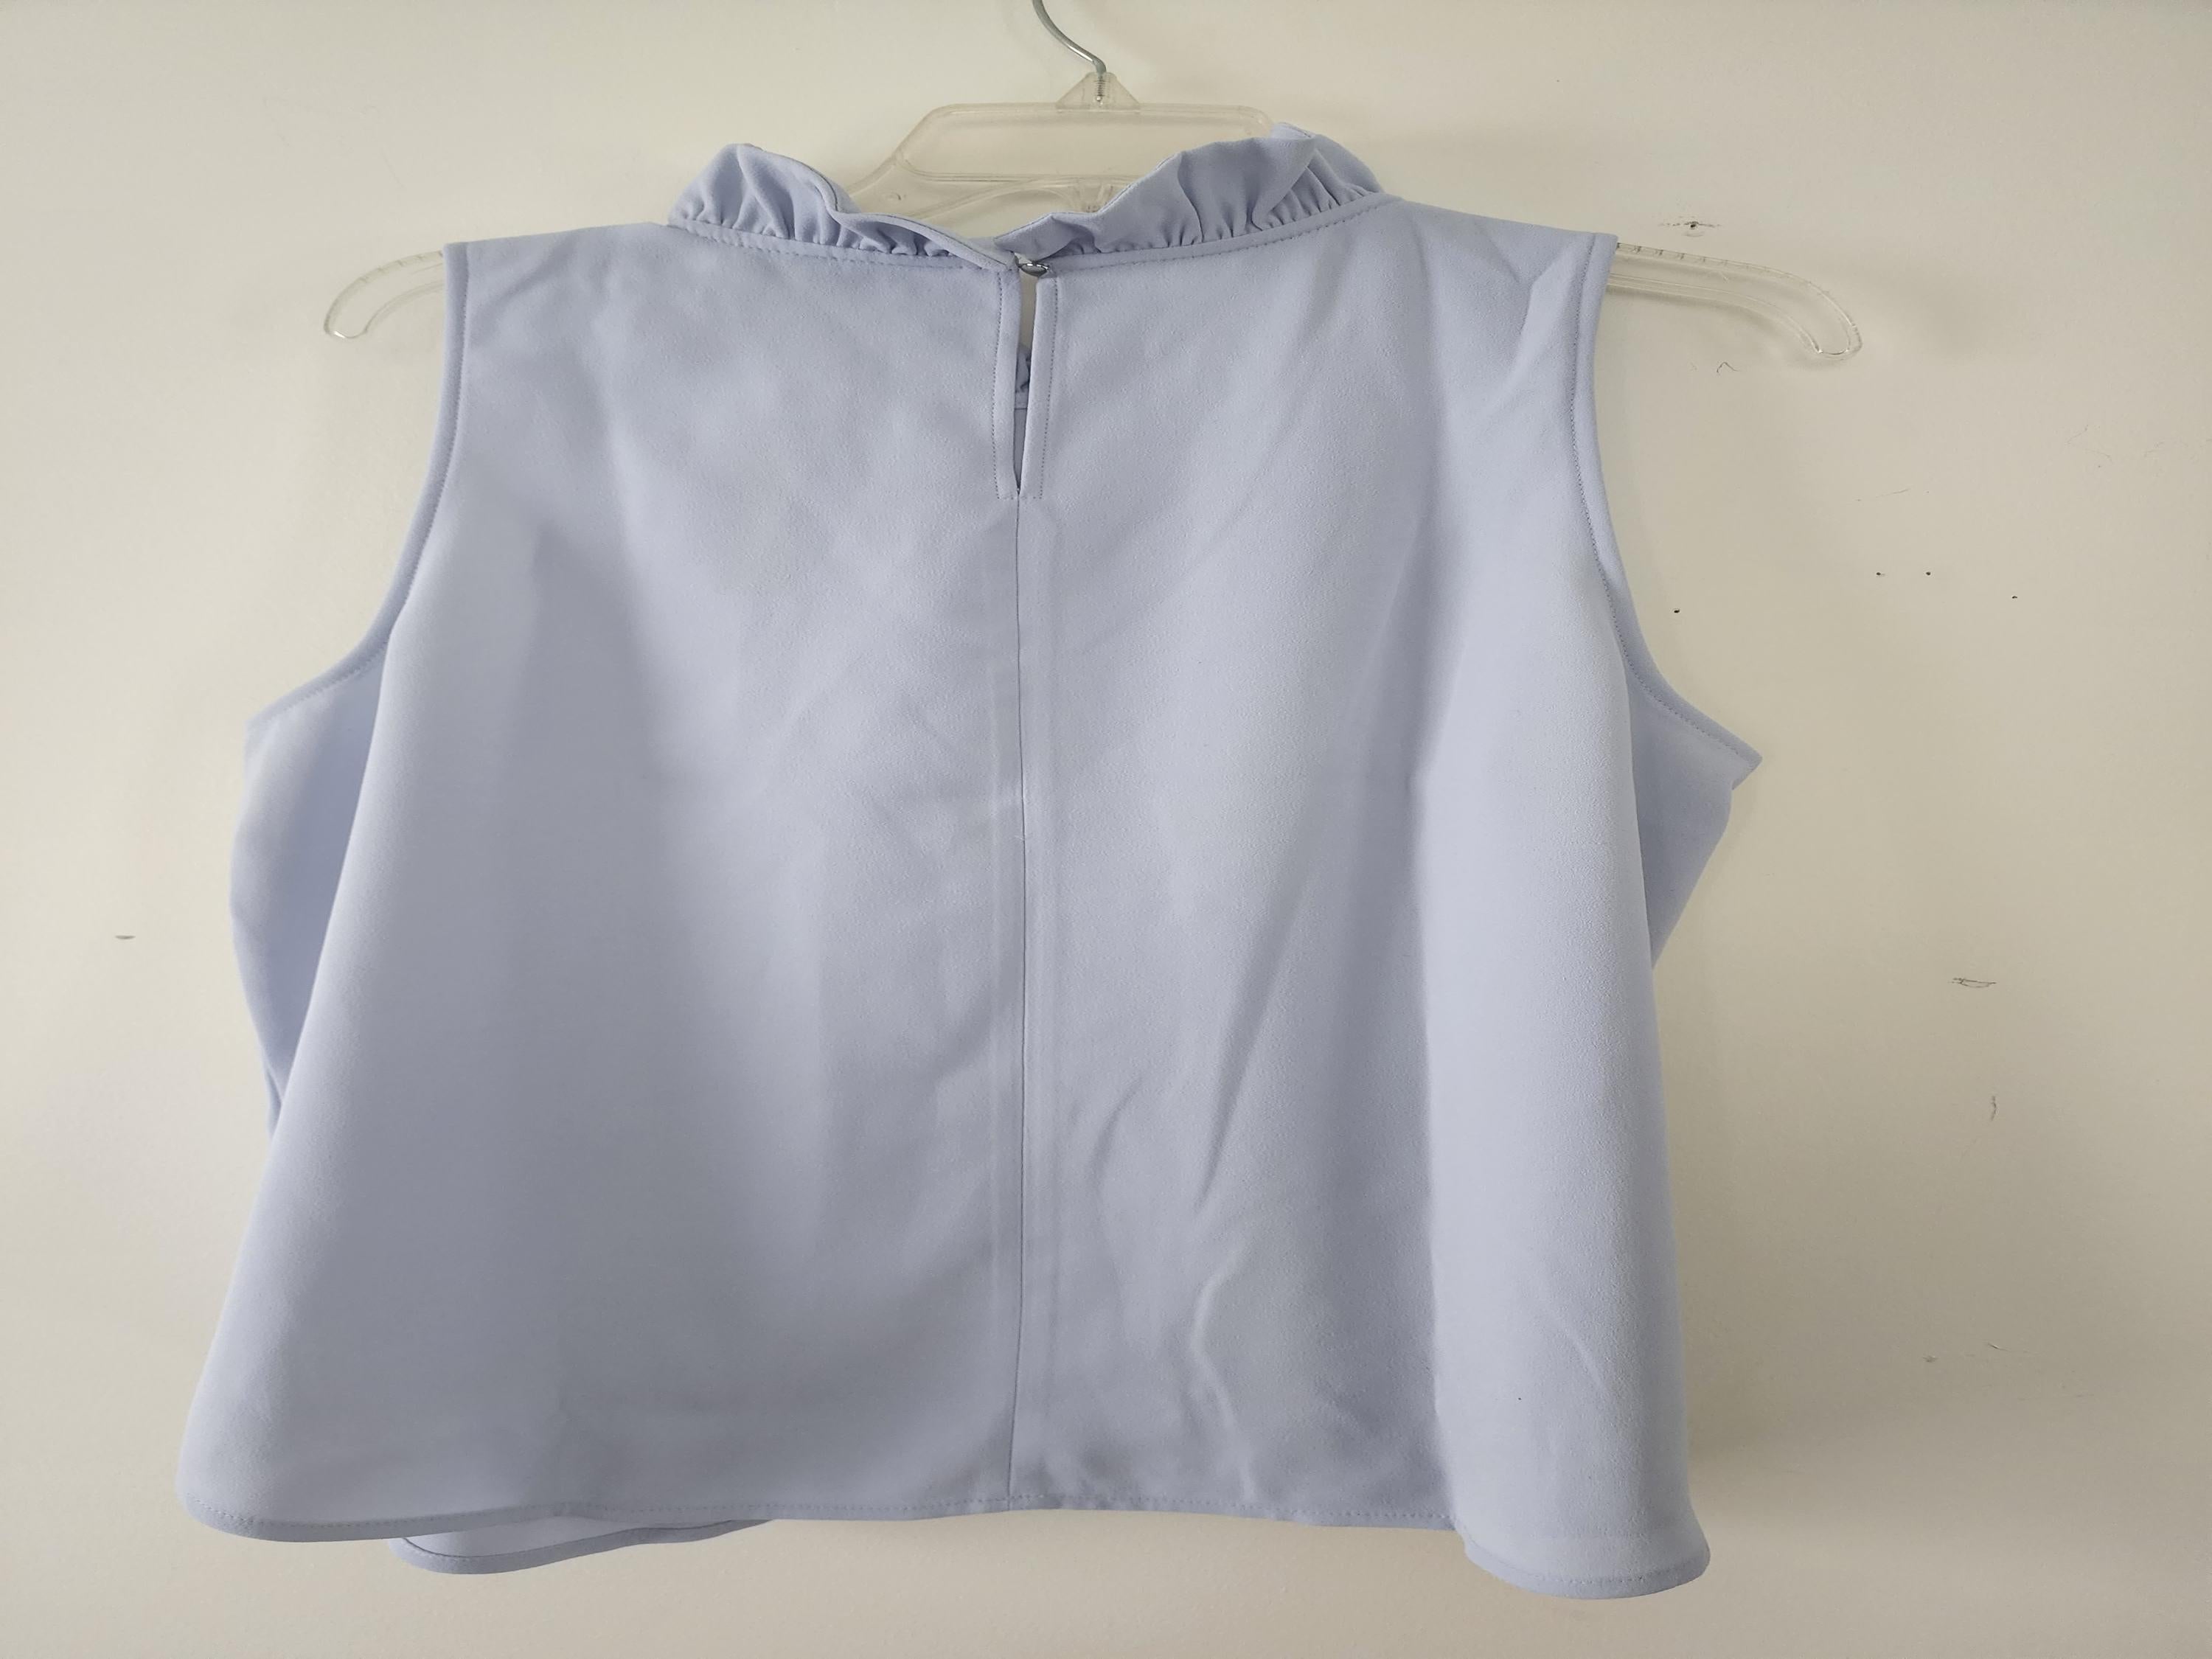 Powder blue ruffle collar sleeveless shirt sz 16